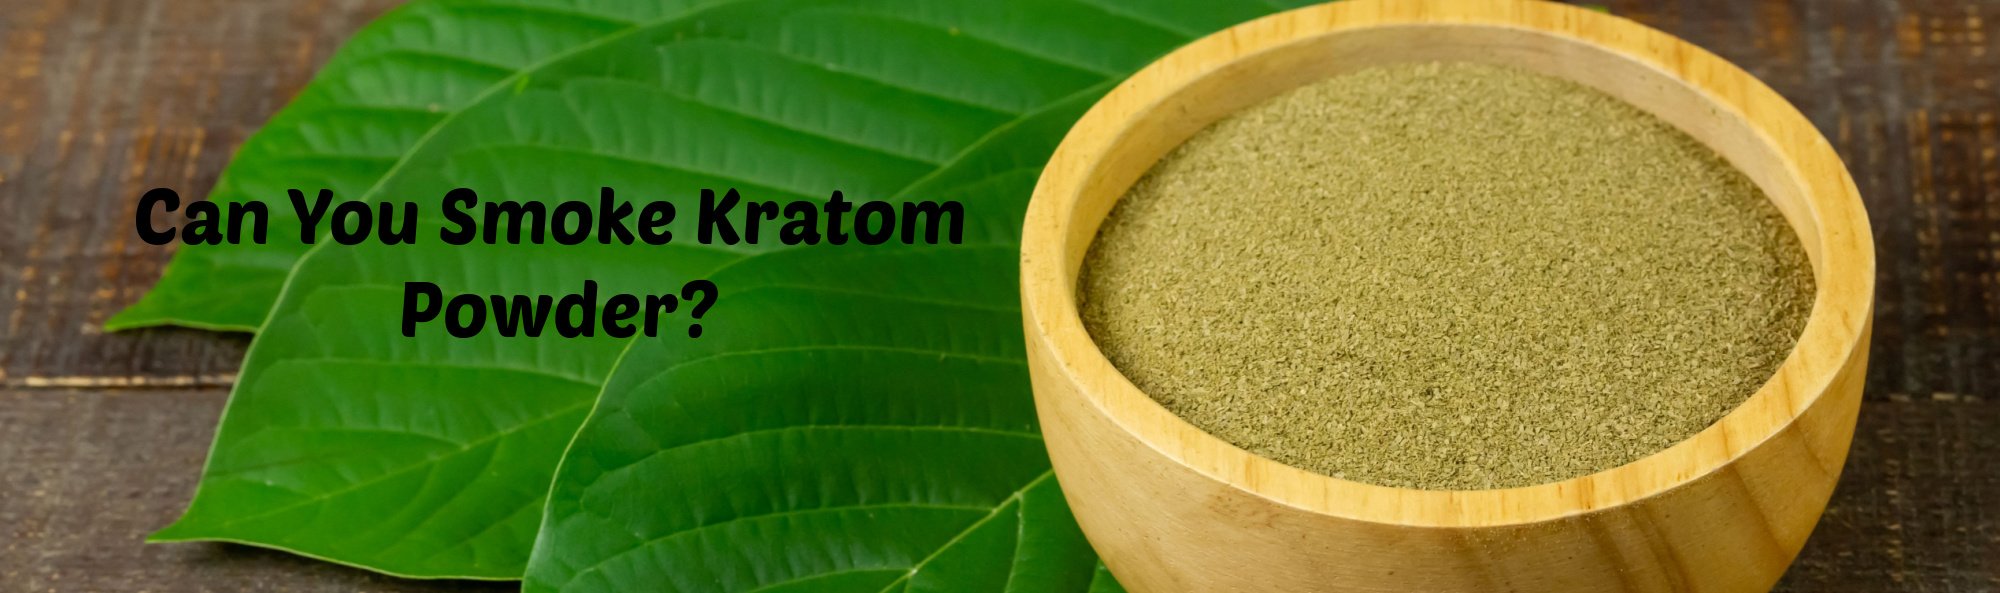 image of can you smoke kratom powder